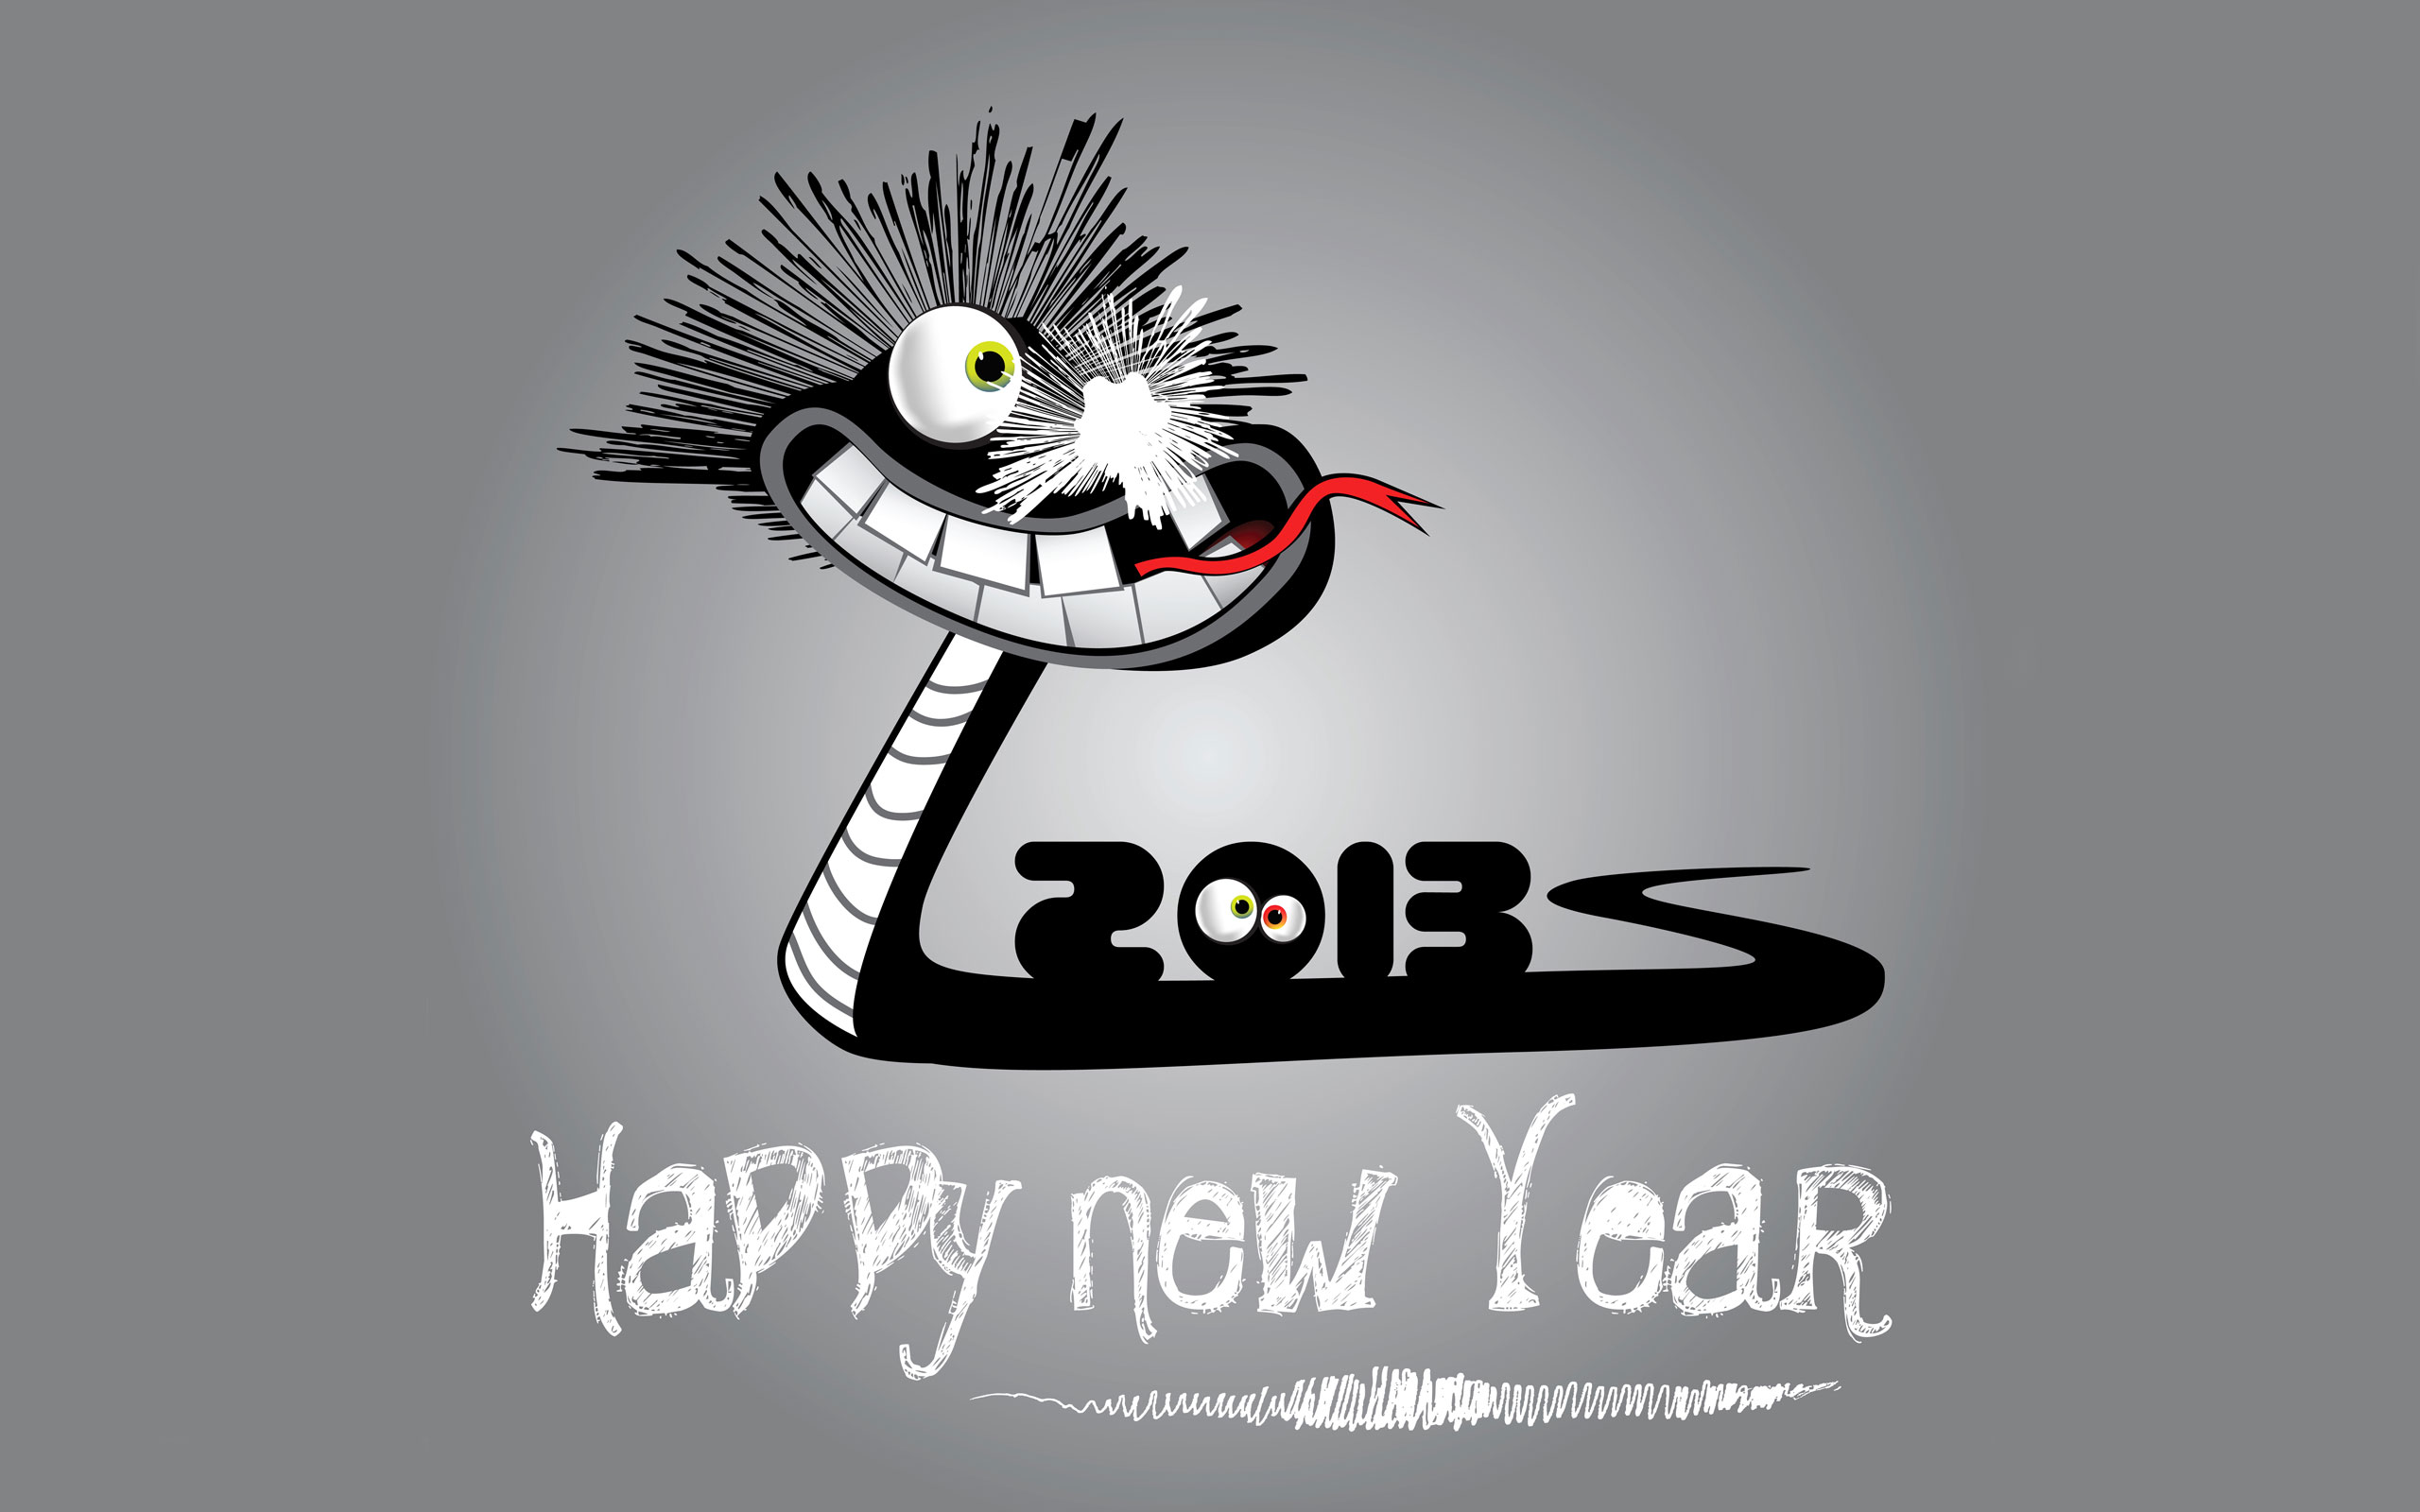 2013 Funny Happy New Year